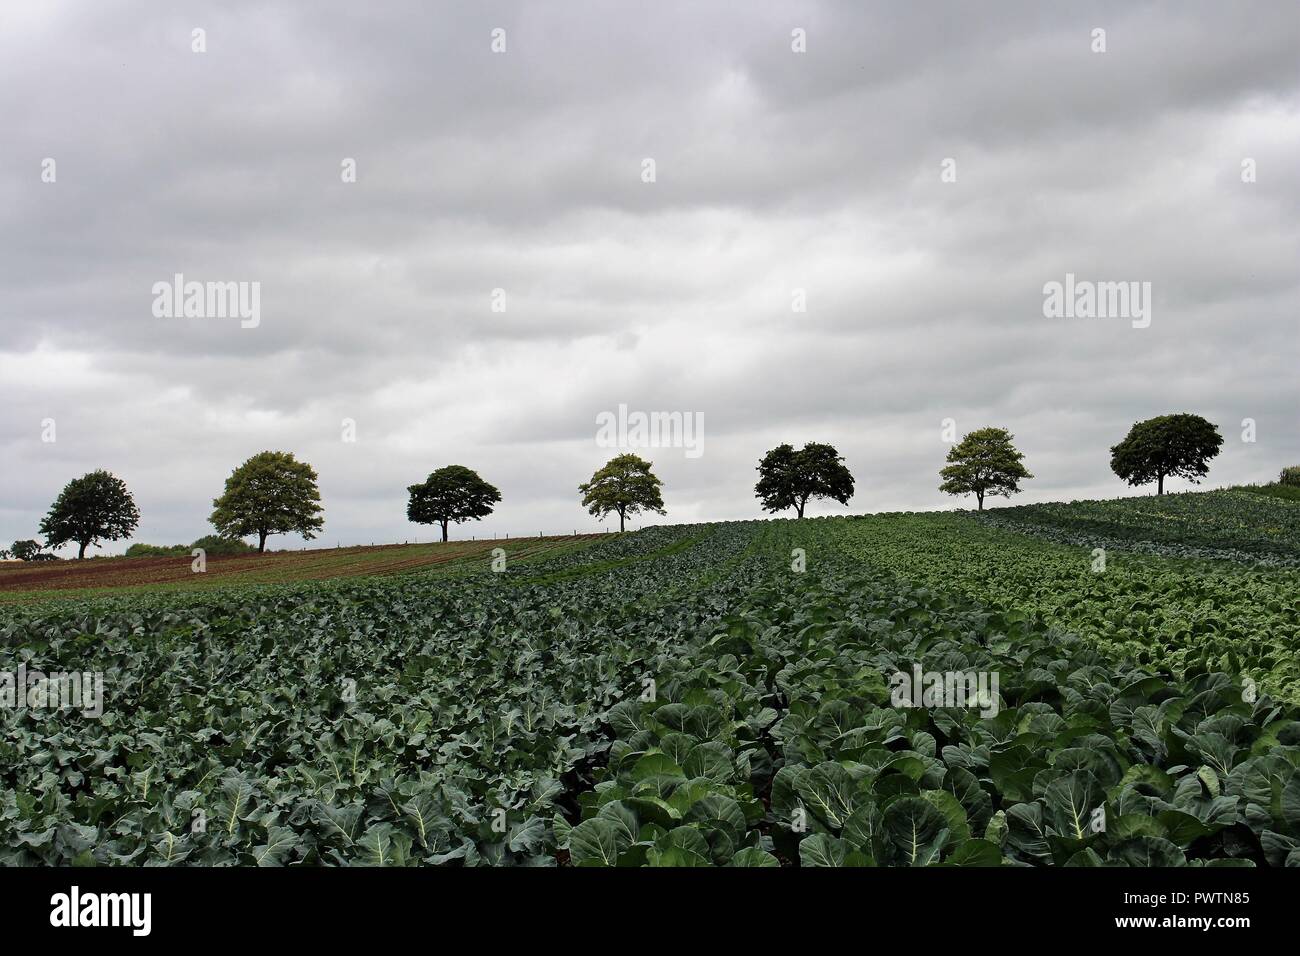 Treeline above field of crops. Stock Photo